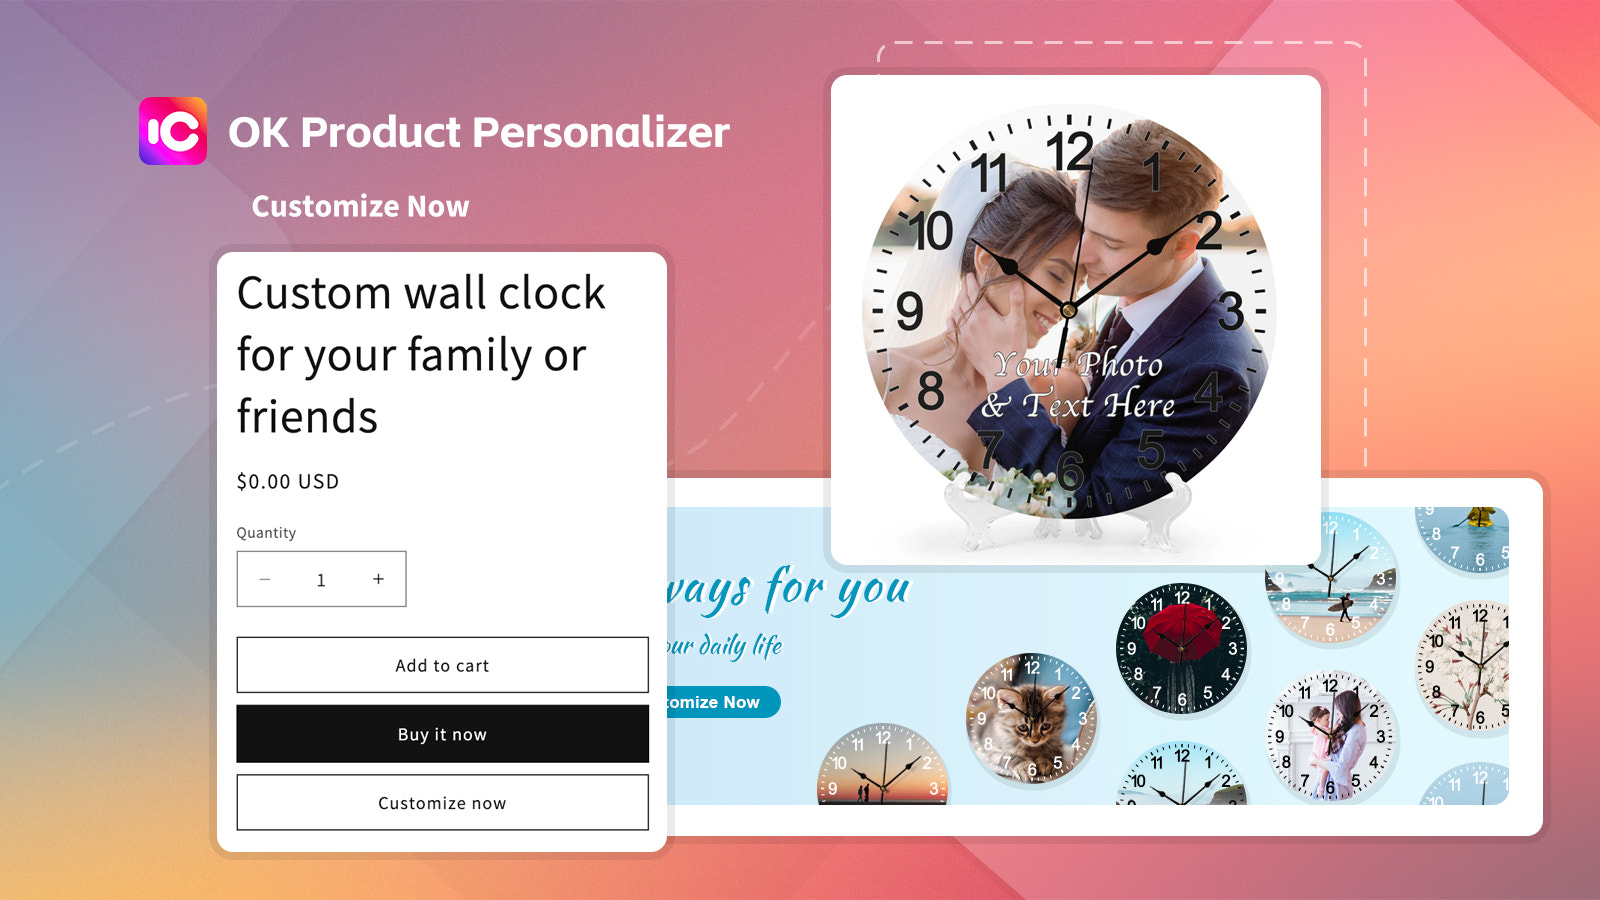 Personnaliser maintenant avec OK Product Personalizer